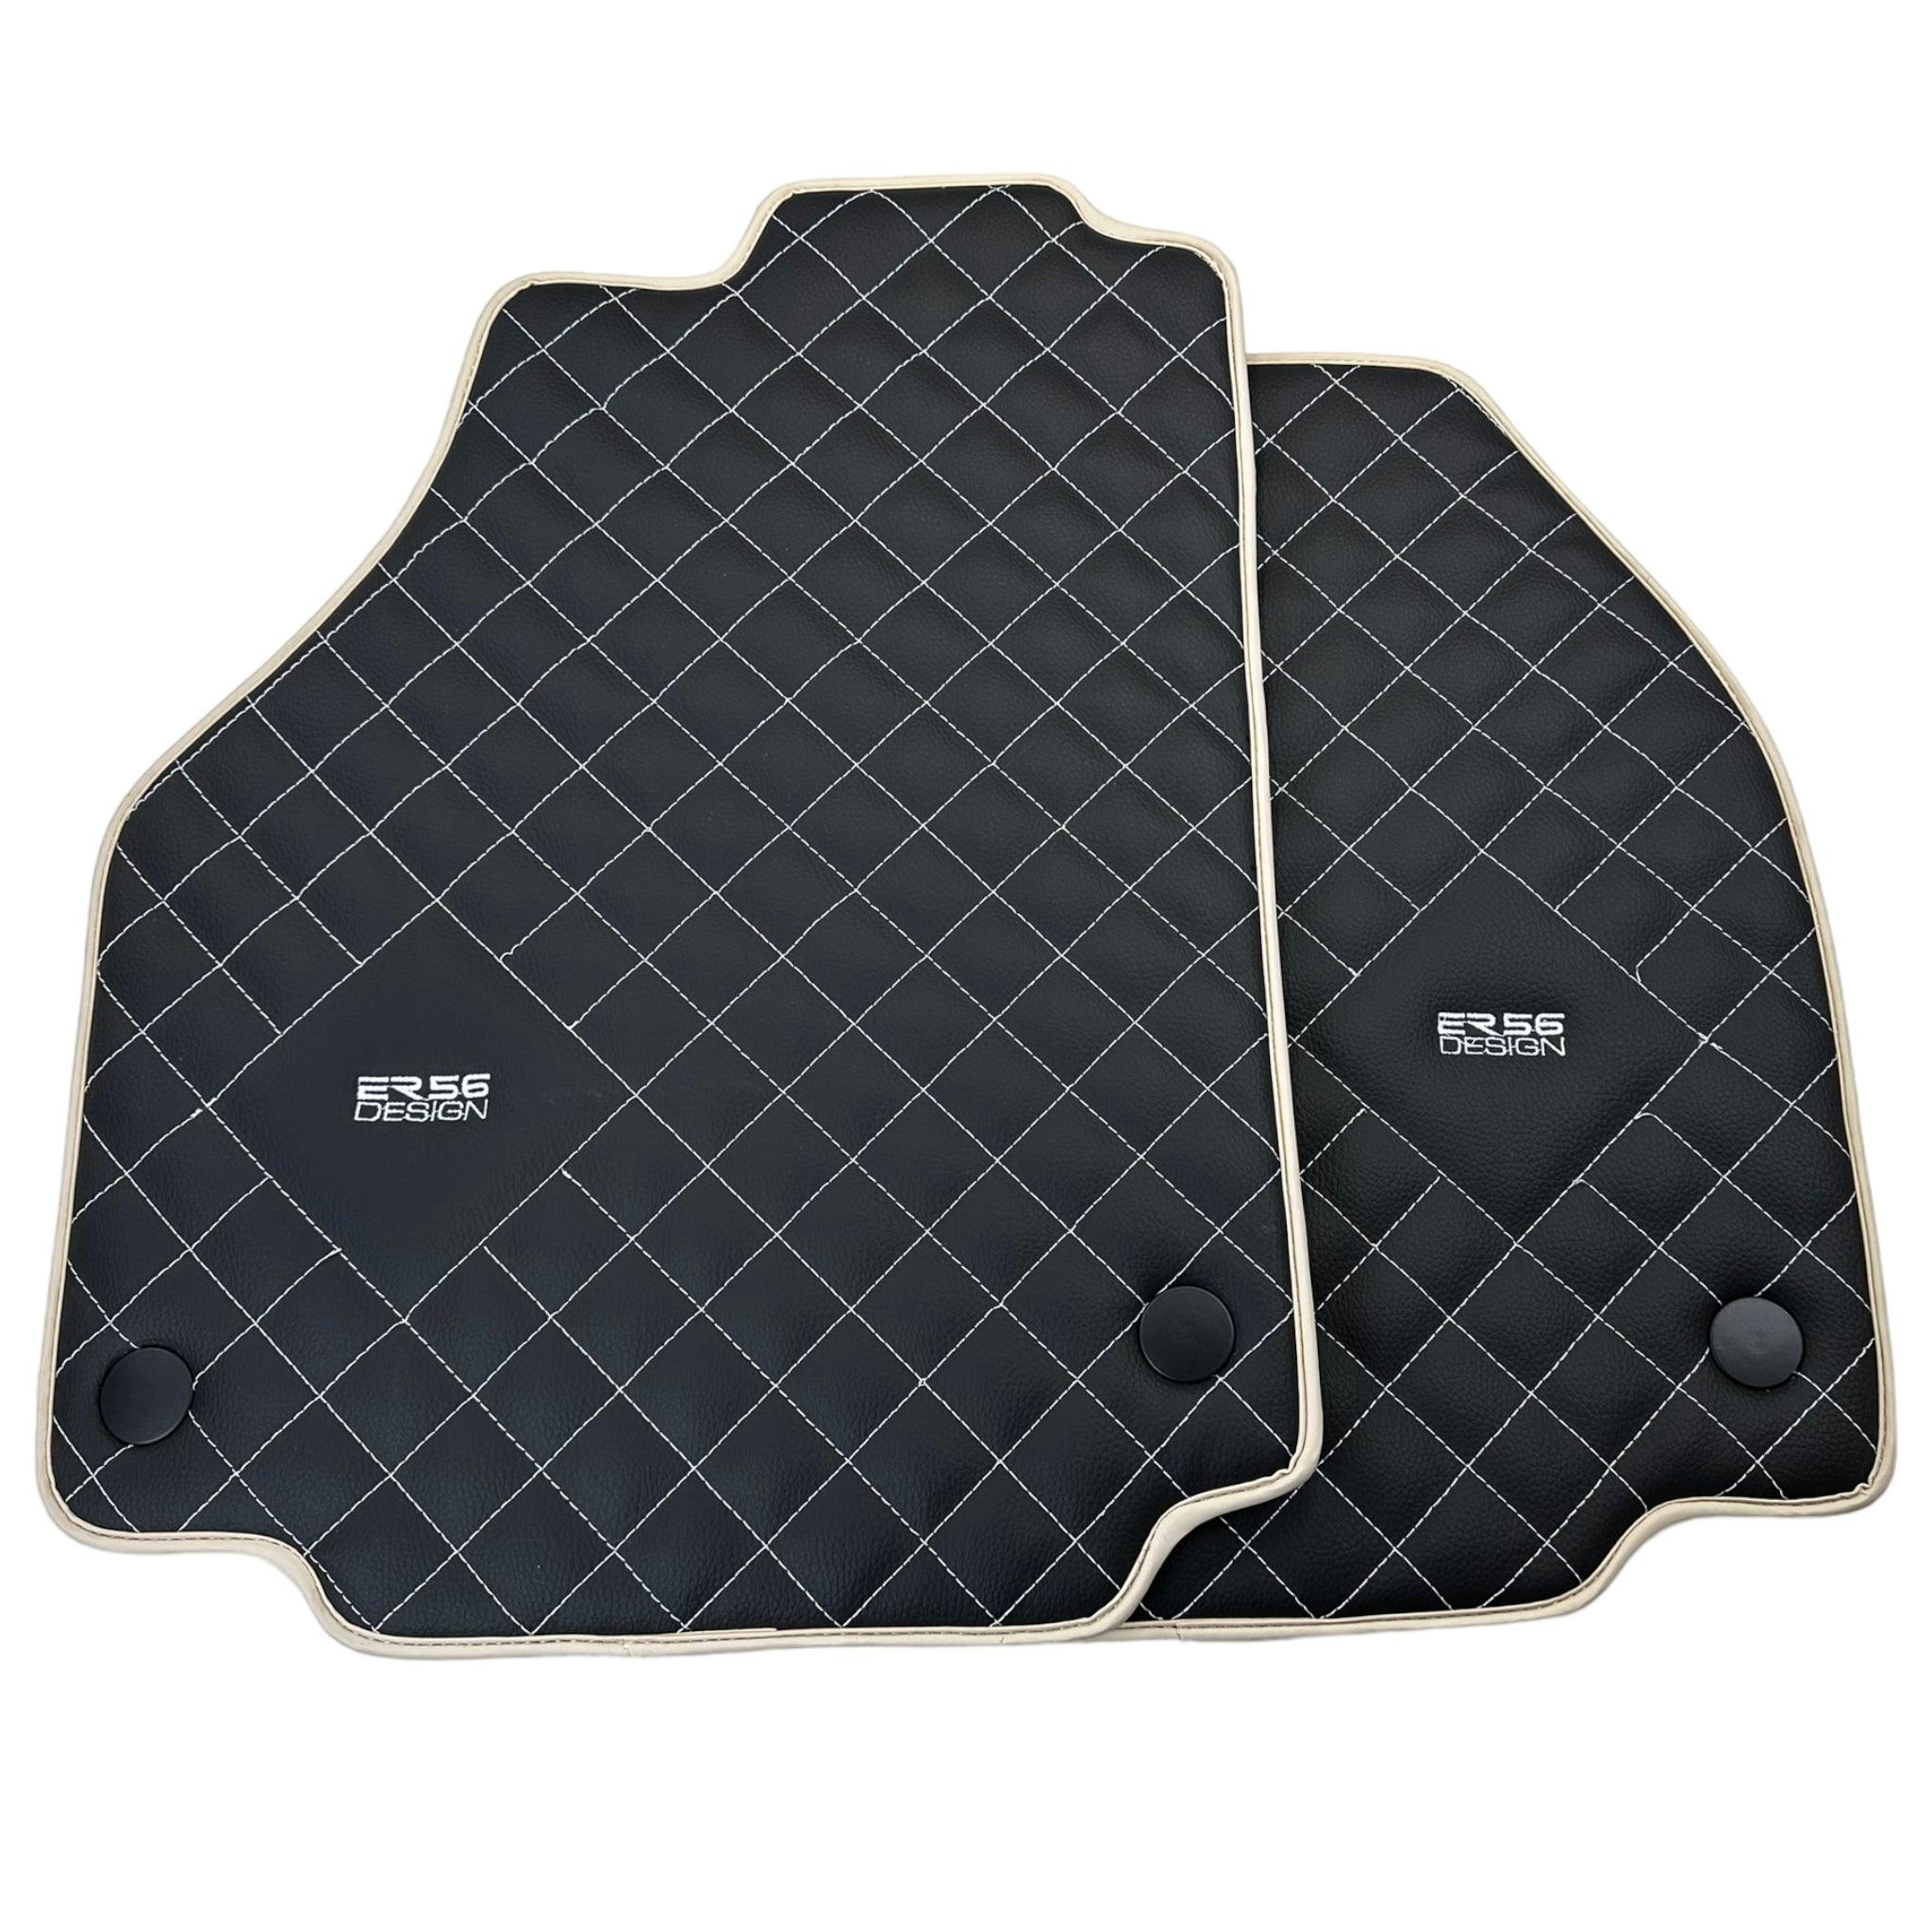 Leather Floor Mats for Ferrari 488 Spider 2015-2022 with White Sewing ER56 Design | Beige Trim